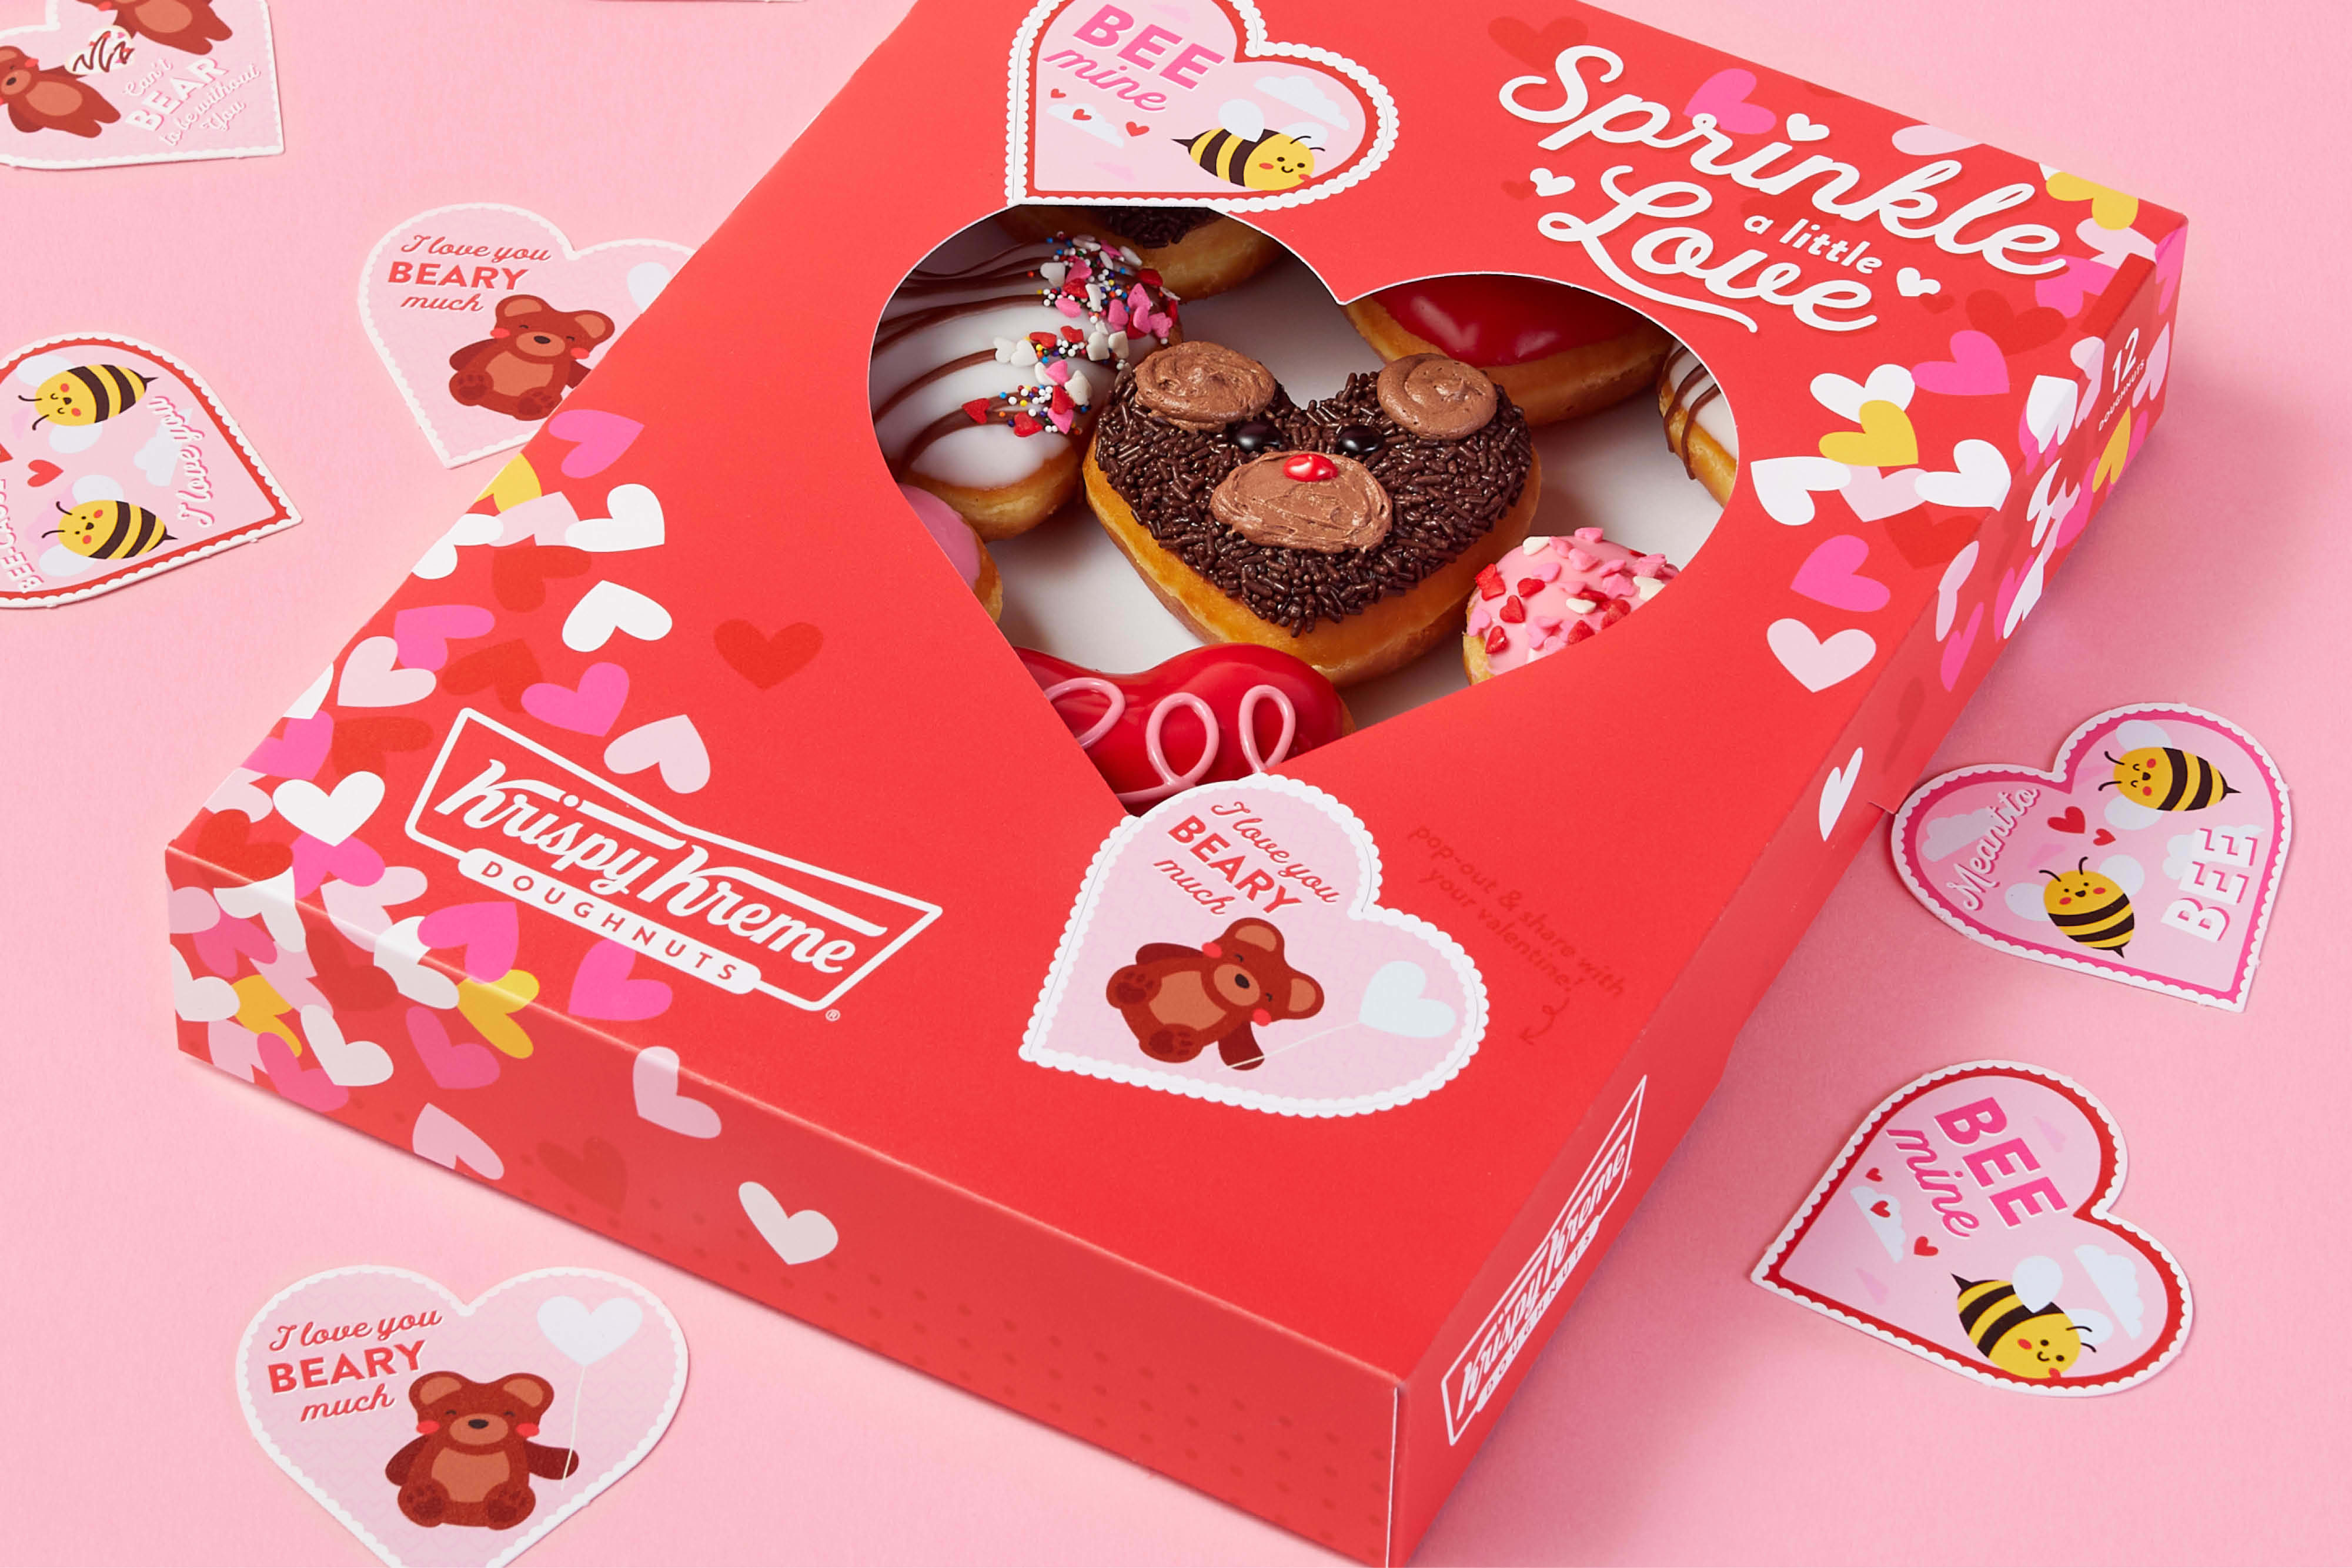 Krispy Kreme Valentine’s Day doughnut collection has everyone buzzing